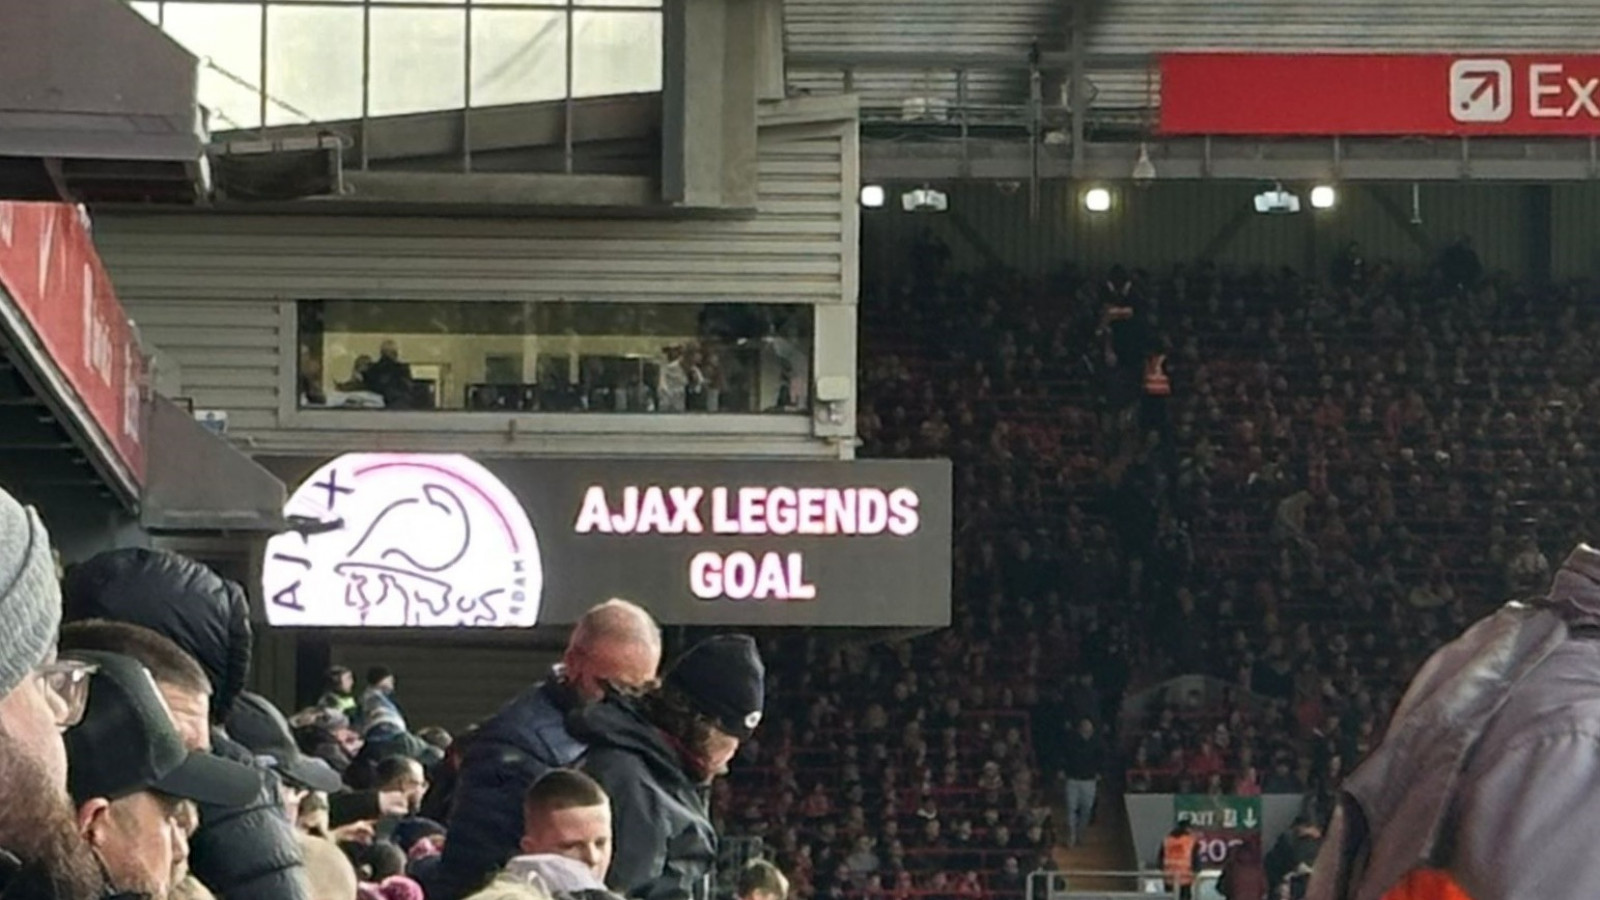 Liverpool Legends - Ajax Legends